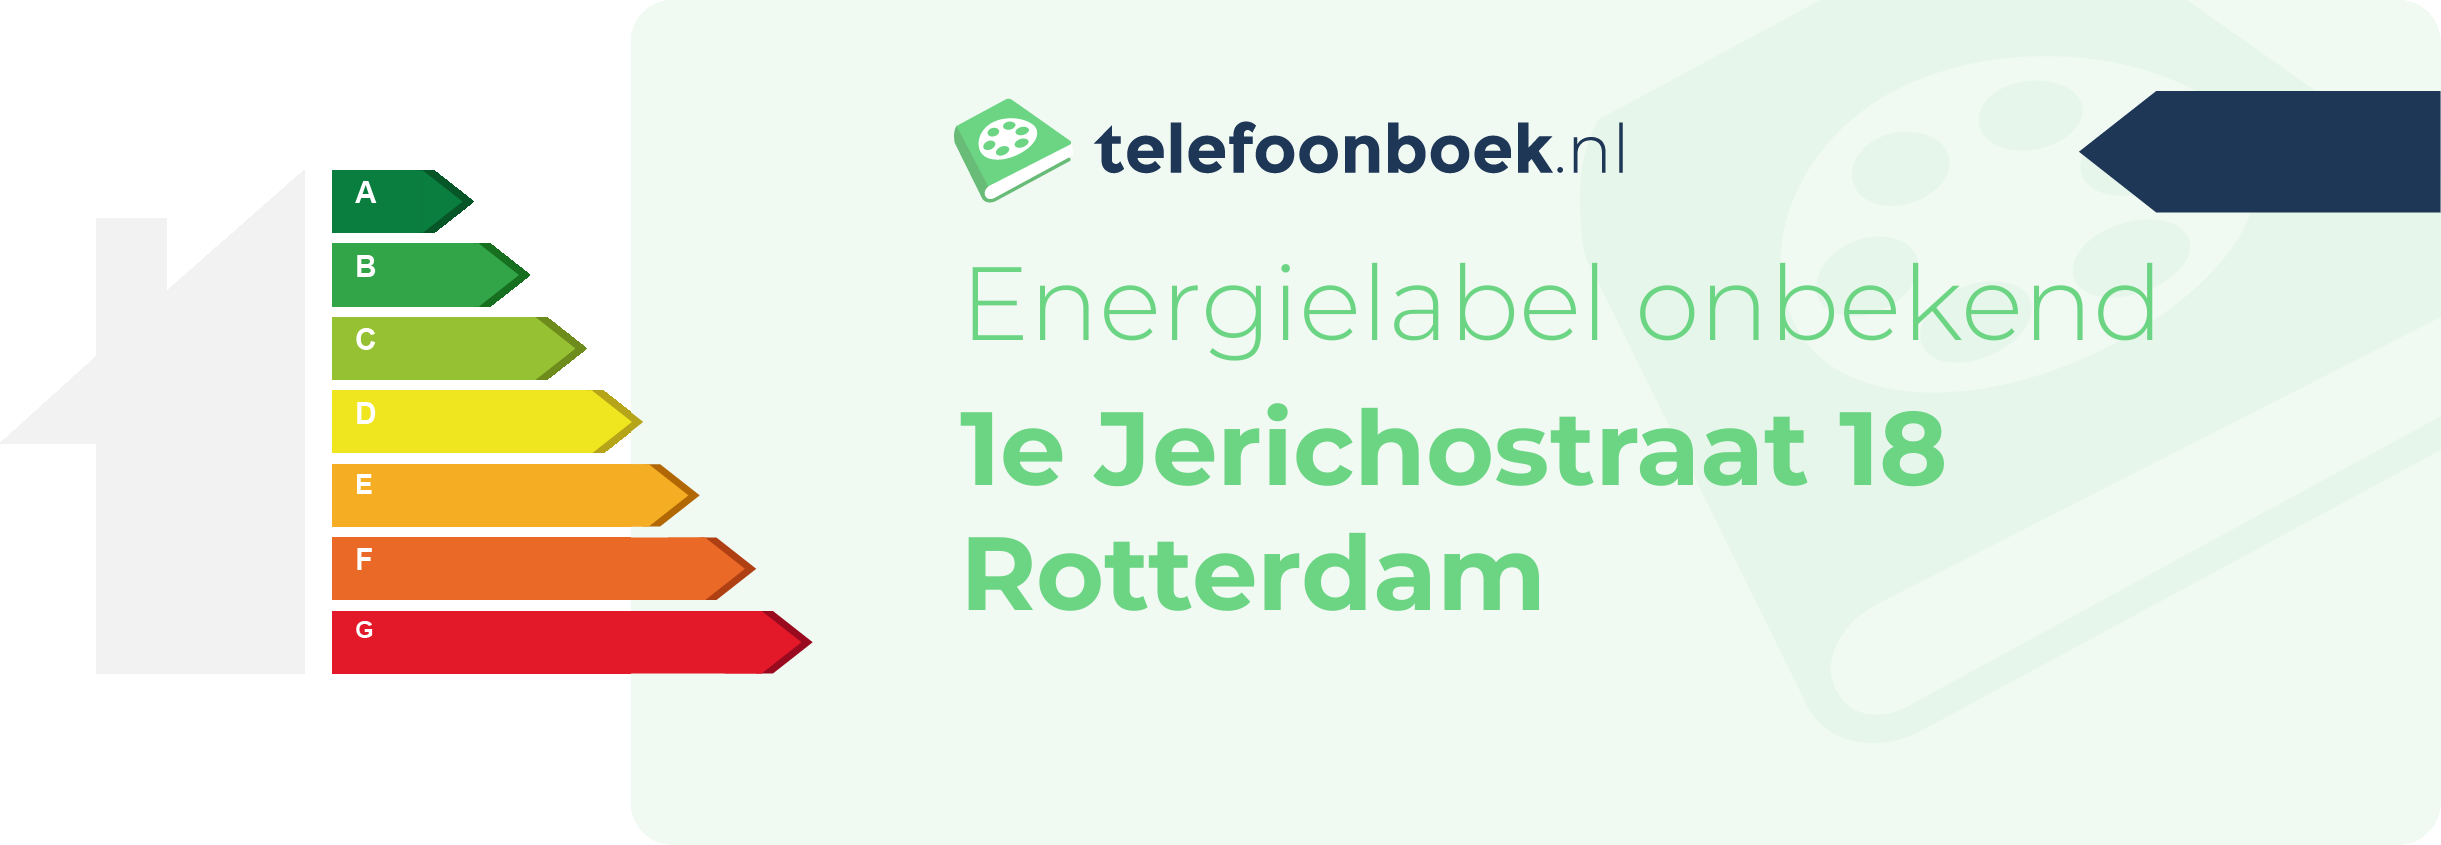 Energielabel 1e Jerichostraat 18 Rotterdam